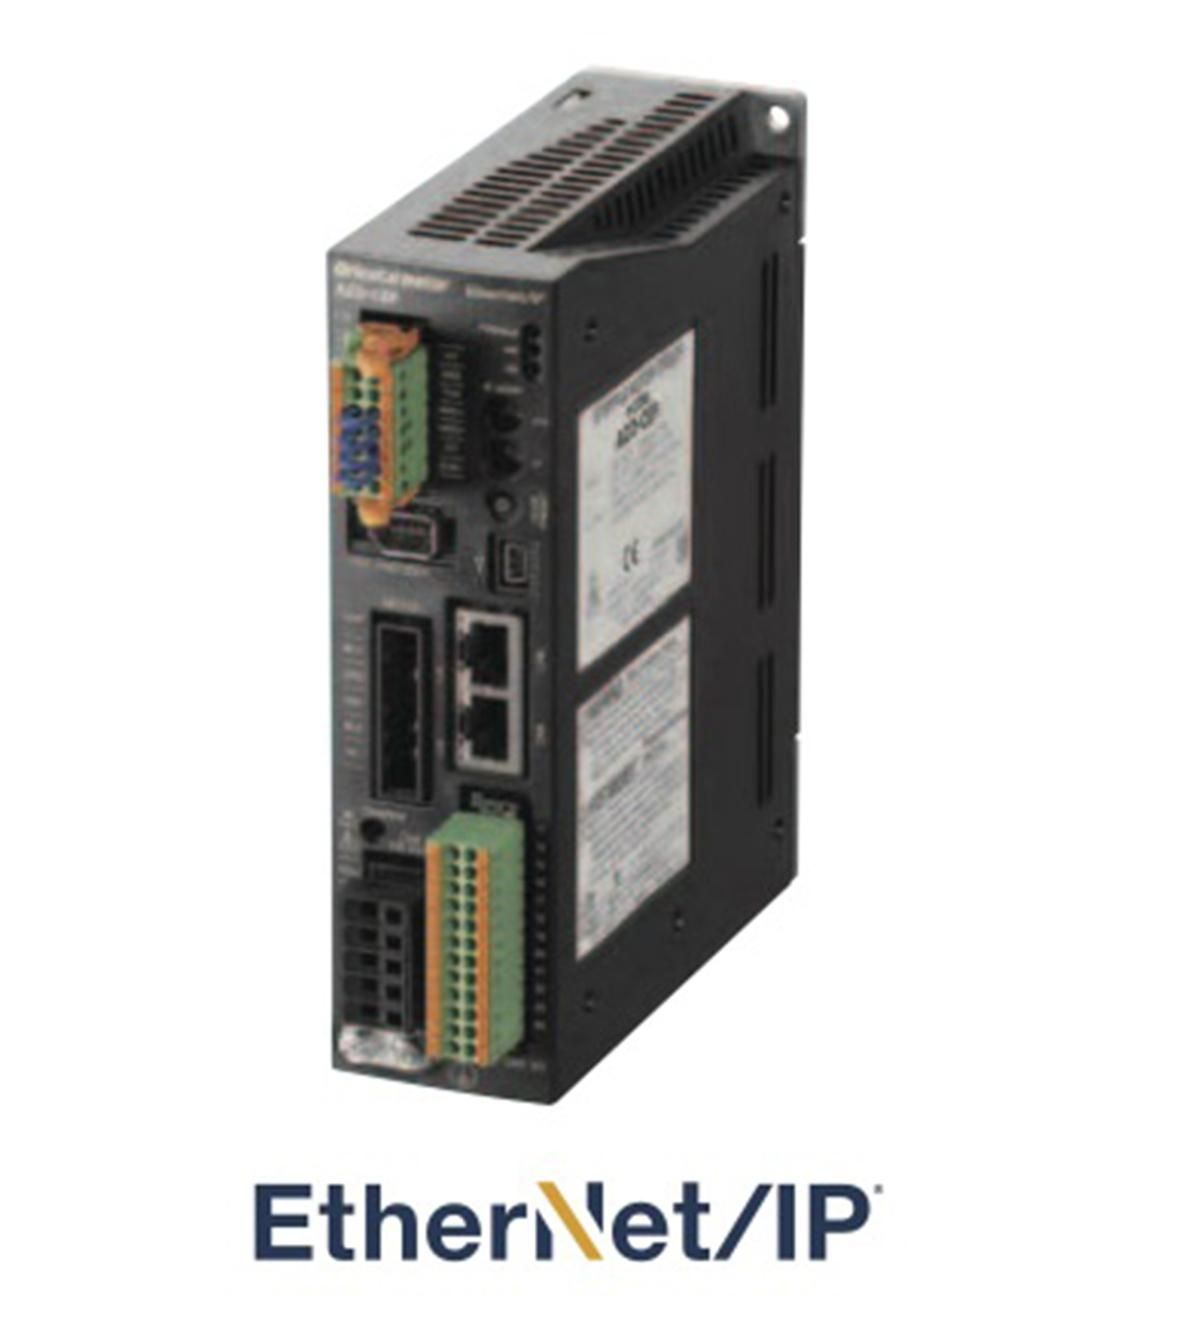 New Ethernet IP driver communications for Oriental Motor's AZ Series of Closed Loop Stepper Motors